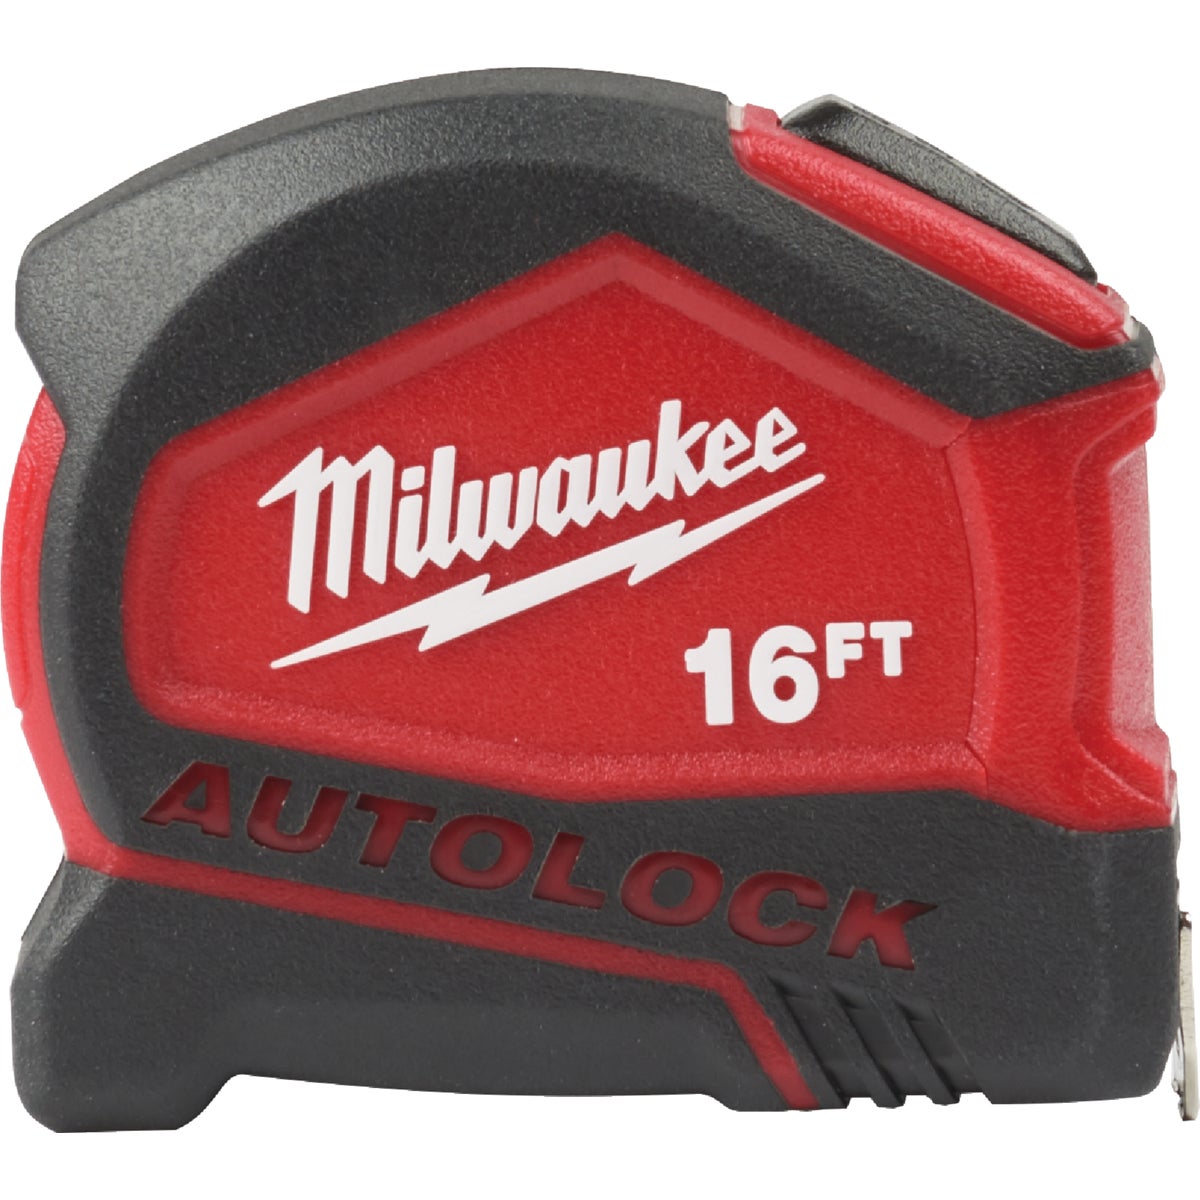 Milwaukee 16 Ft. Compact Auto Lock Tape Measure